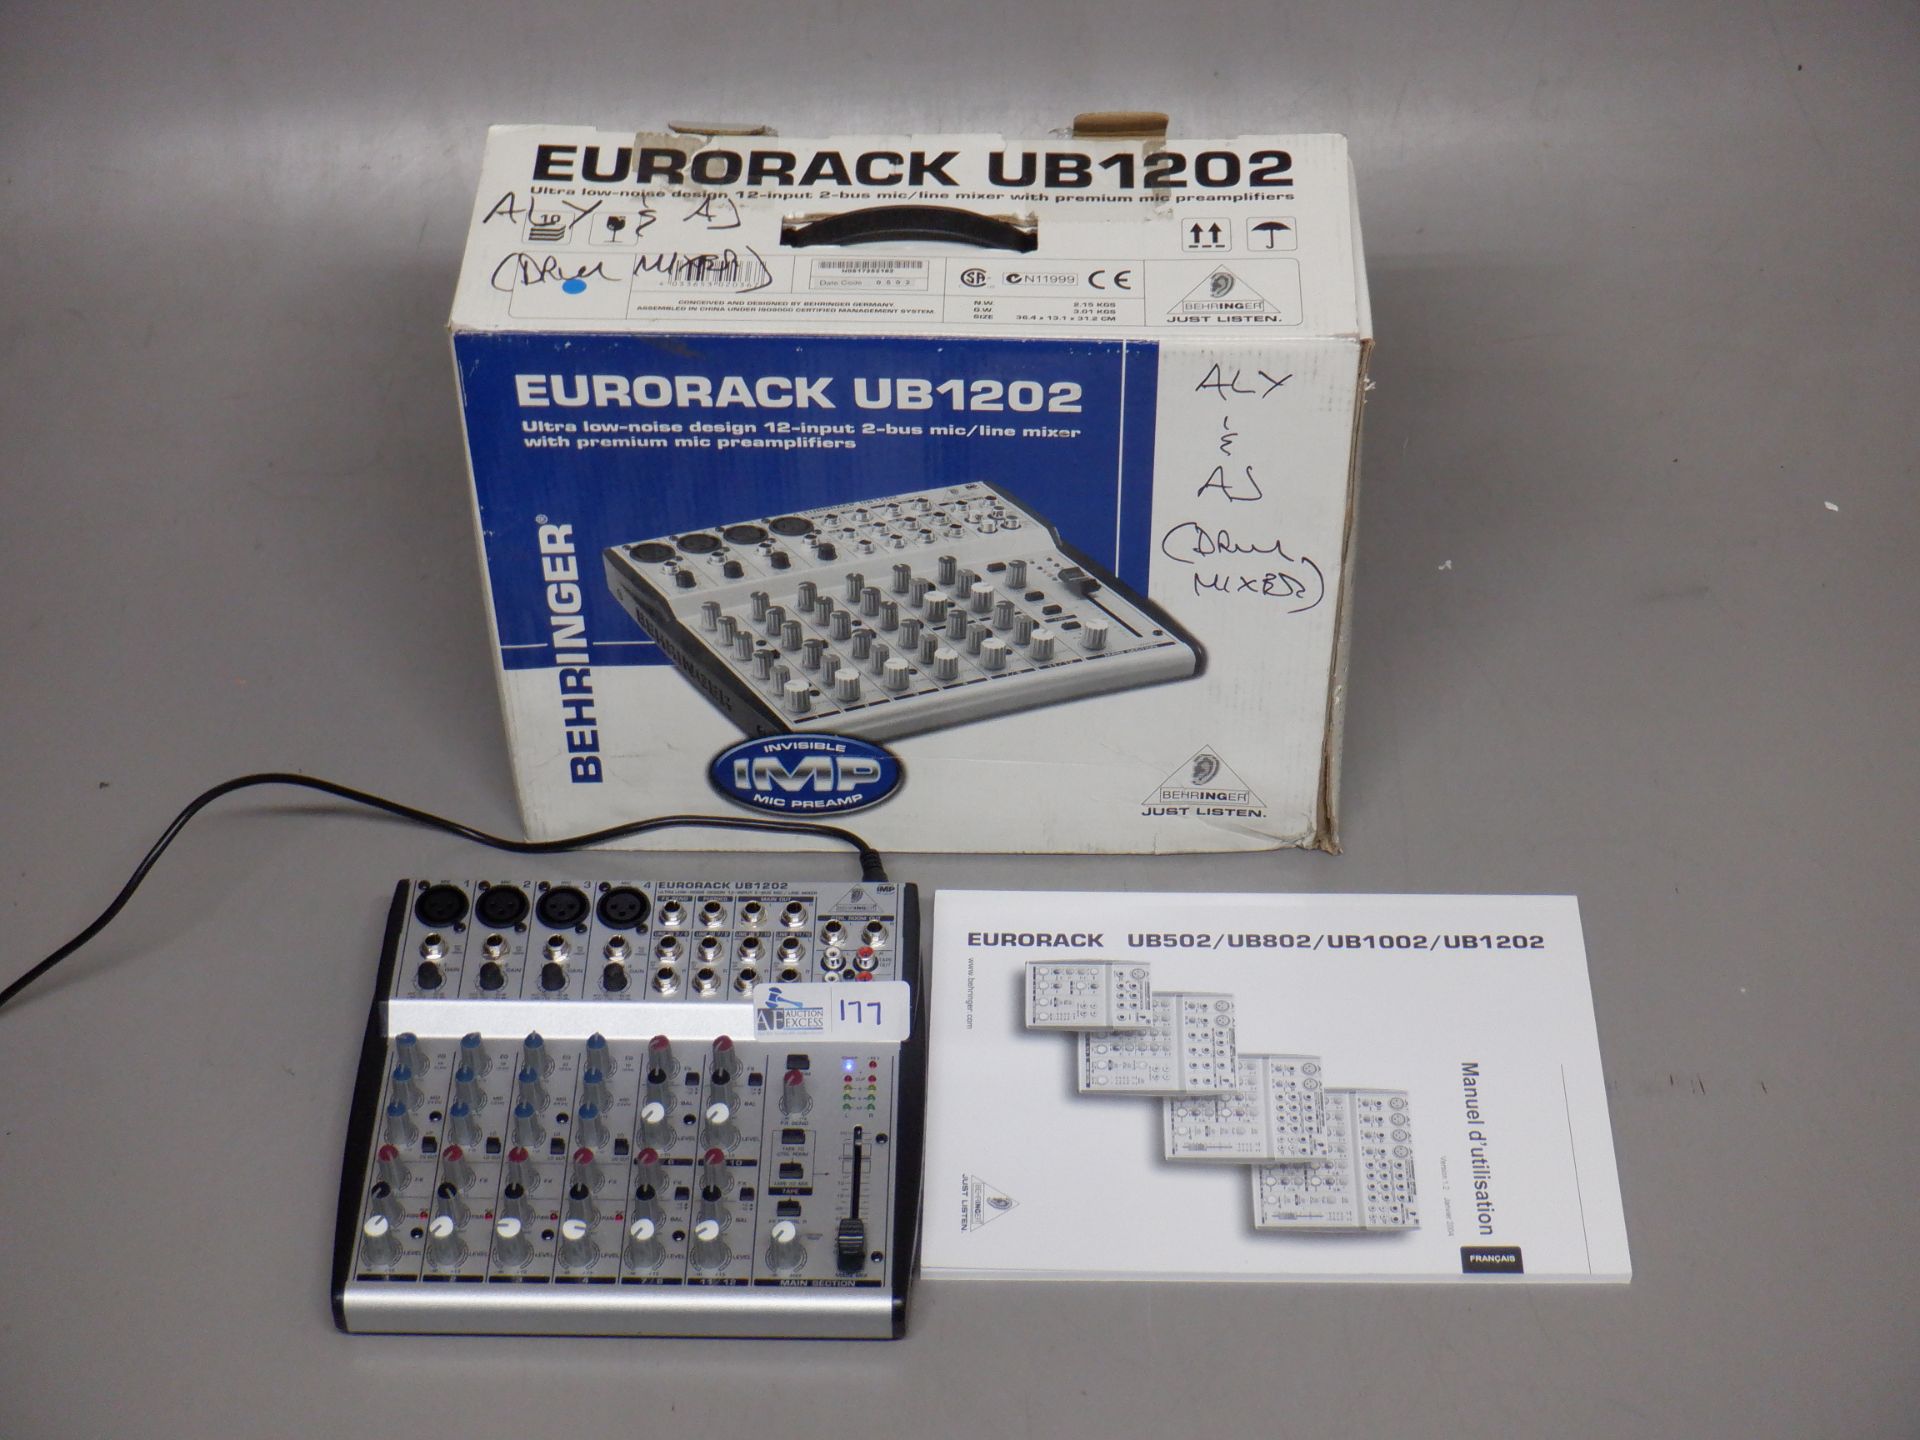 BEHRINGER EURORACK UB 1202 IN ORIGINAL BOX - Image 2 of 4